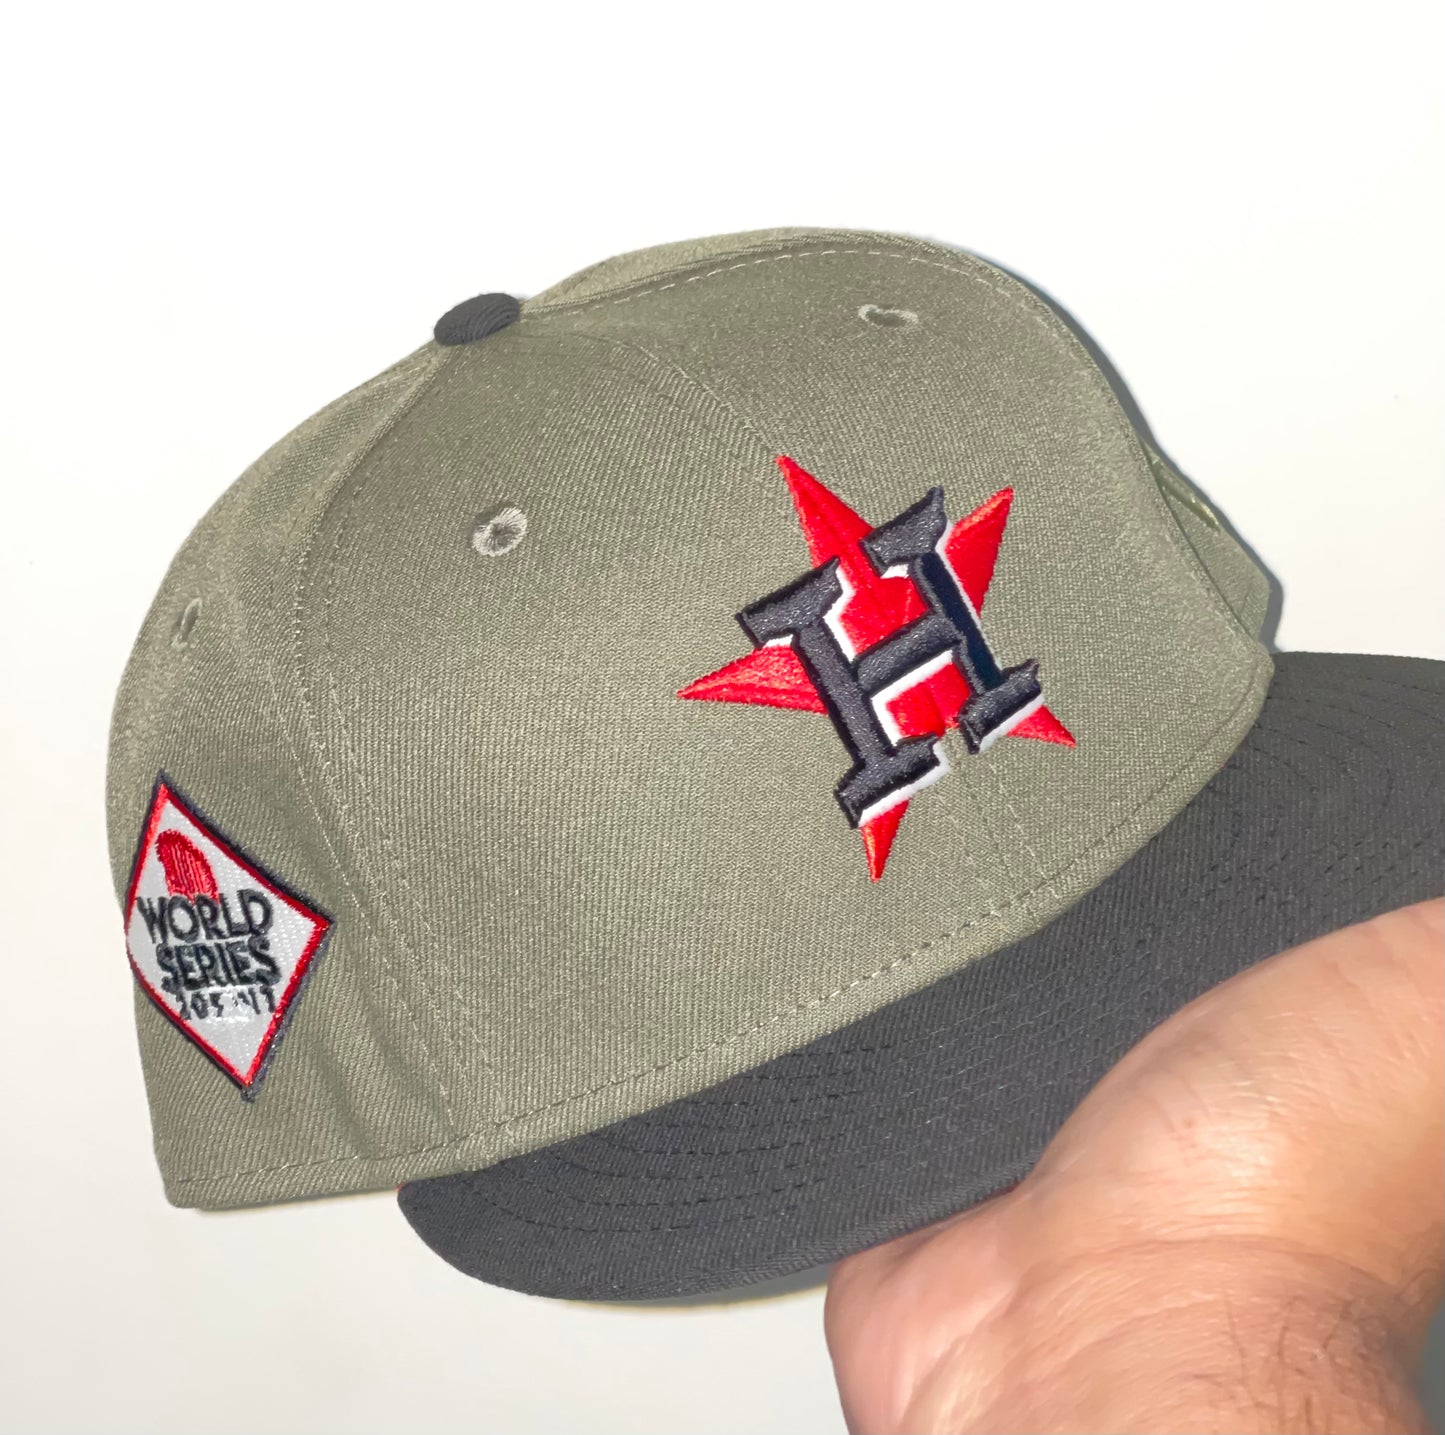 Houston Astros Travis Scott Inspired “Glow In The Dark” 2017 World Series Patch Fitted Hat (Olive/Black/Red/GITD) New Era 5950